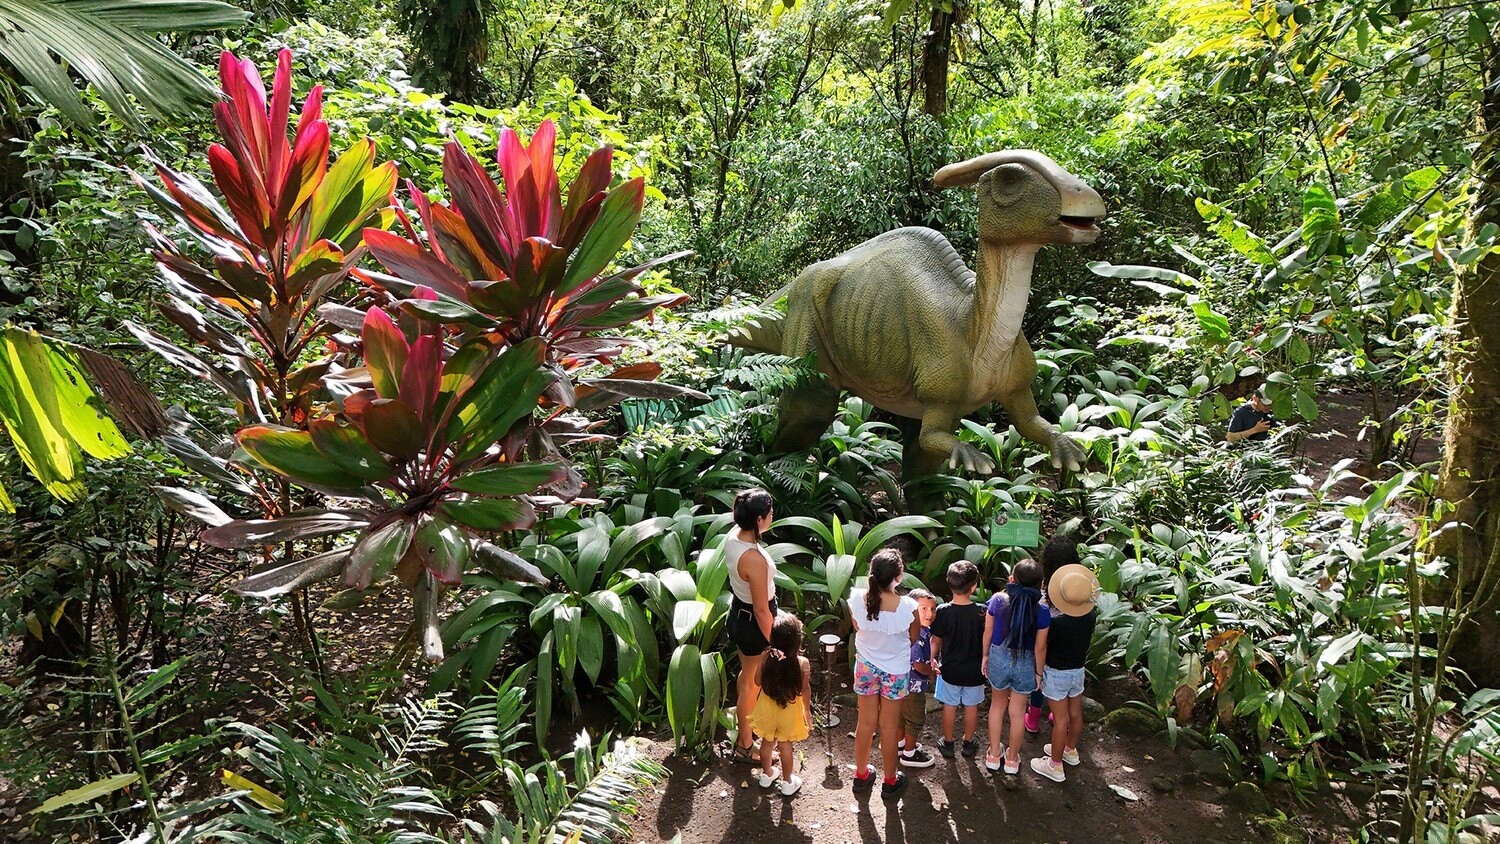 Dinosaur garden